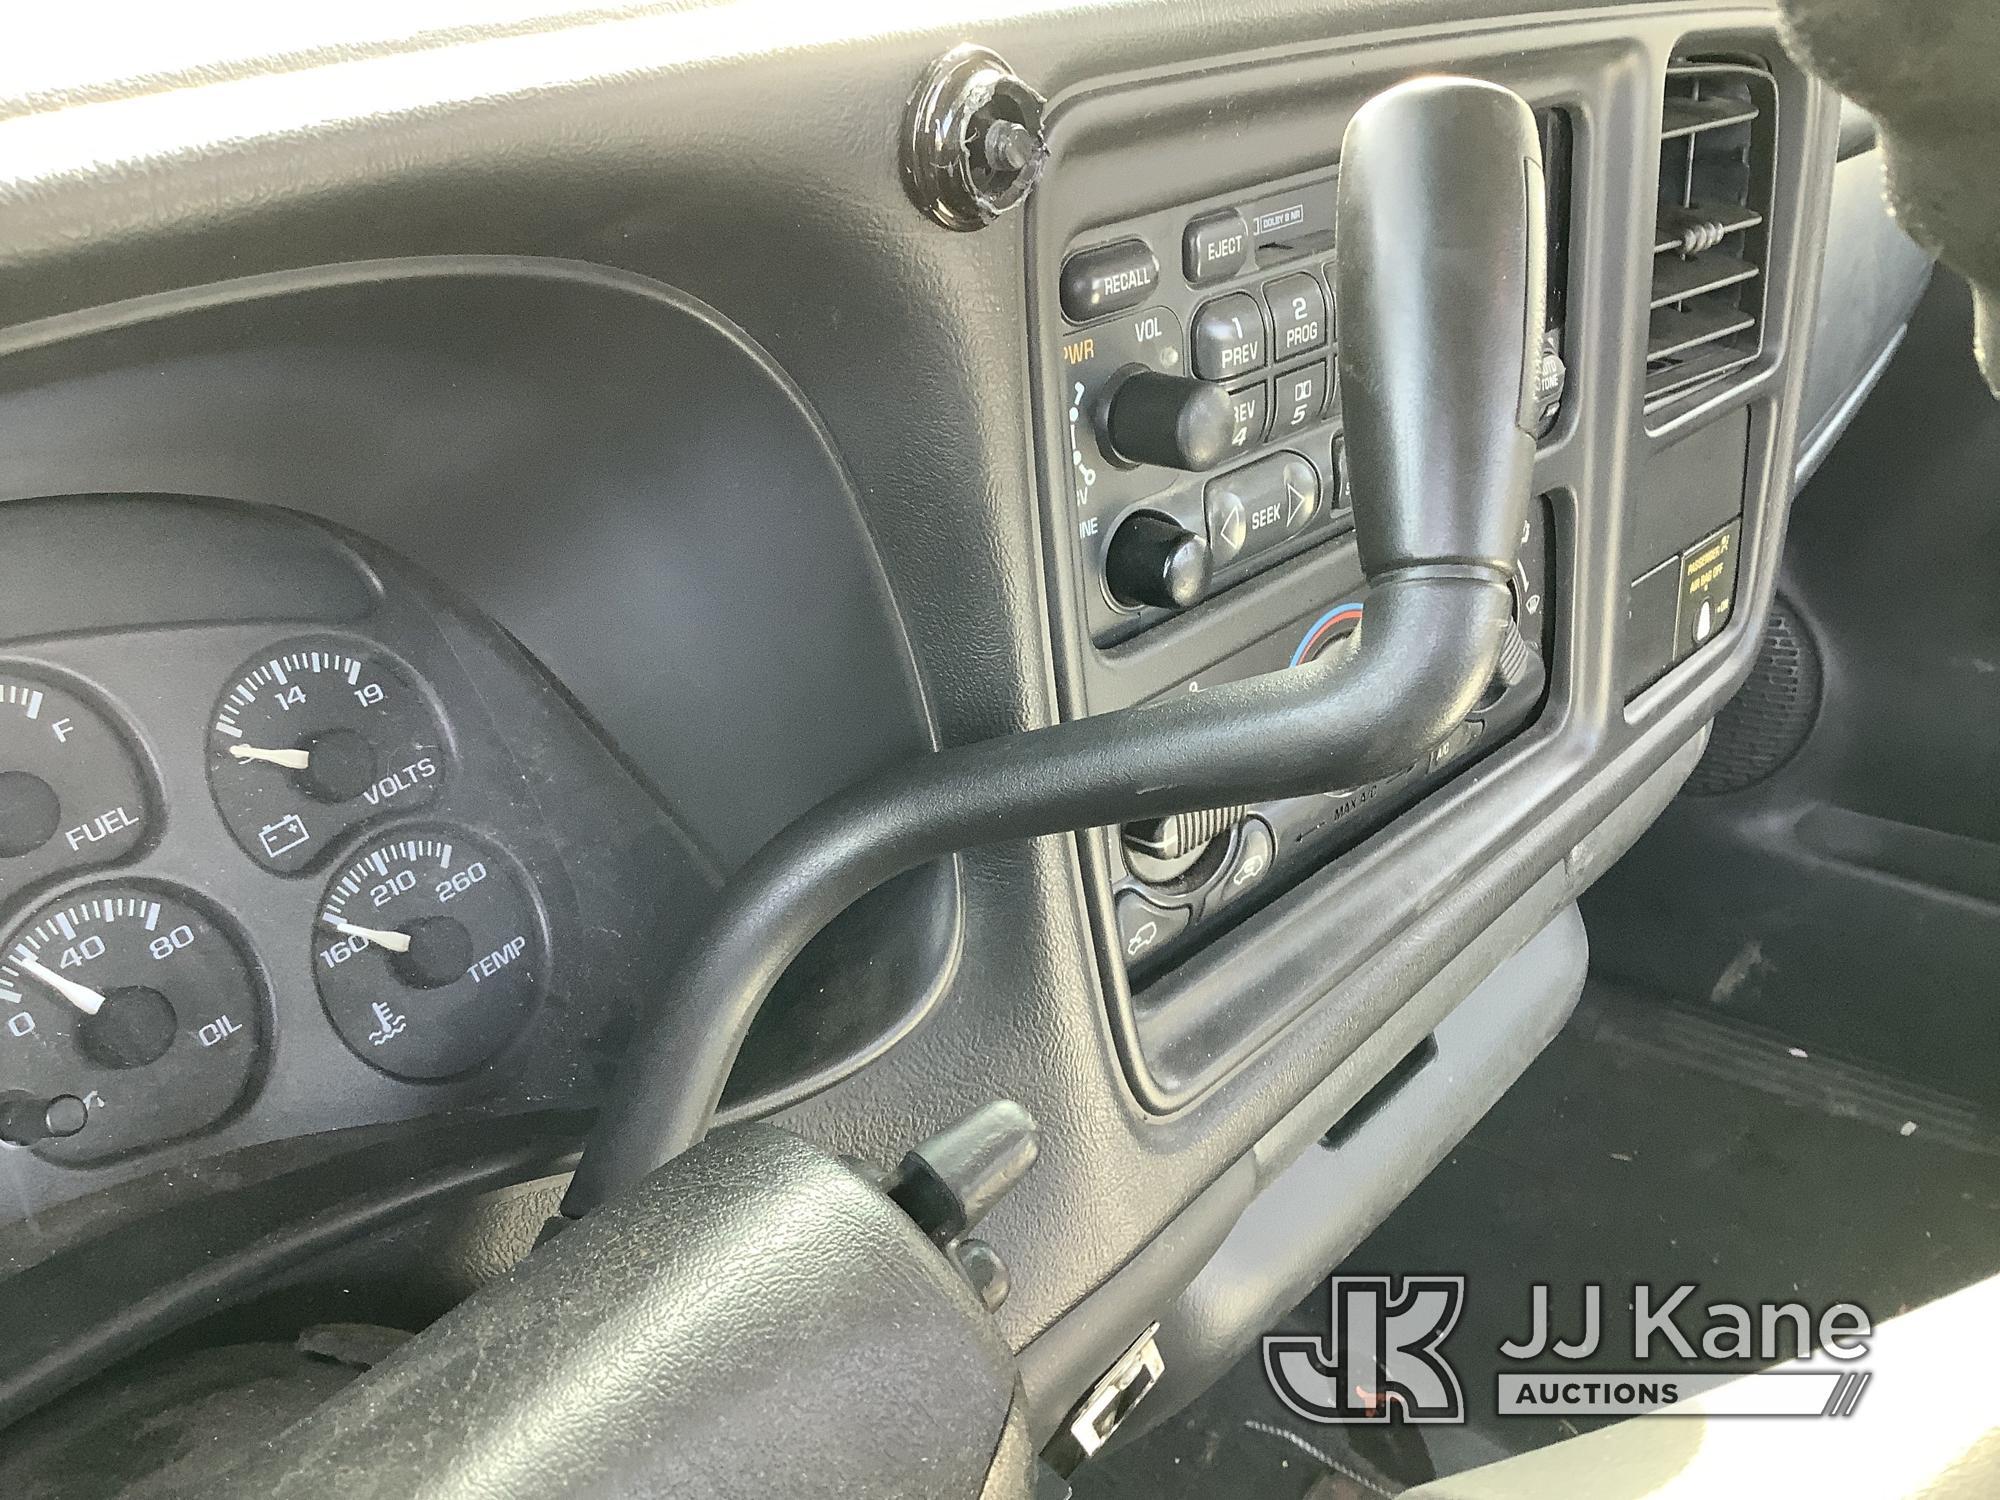 (Graysville, AL) 2000 Chevrolet Silverado 1500 4x4 Pickup Truck Not Running, Condition Unknown, No K